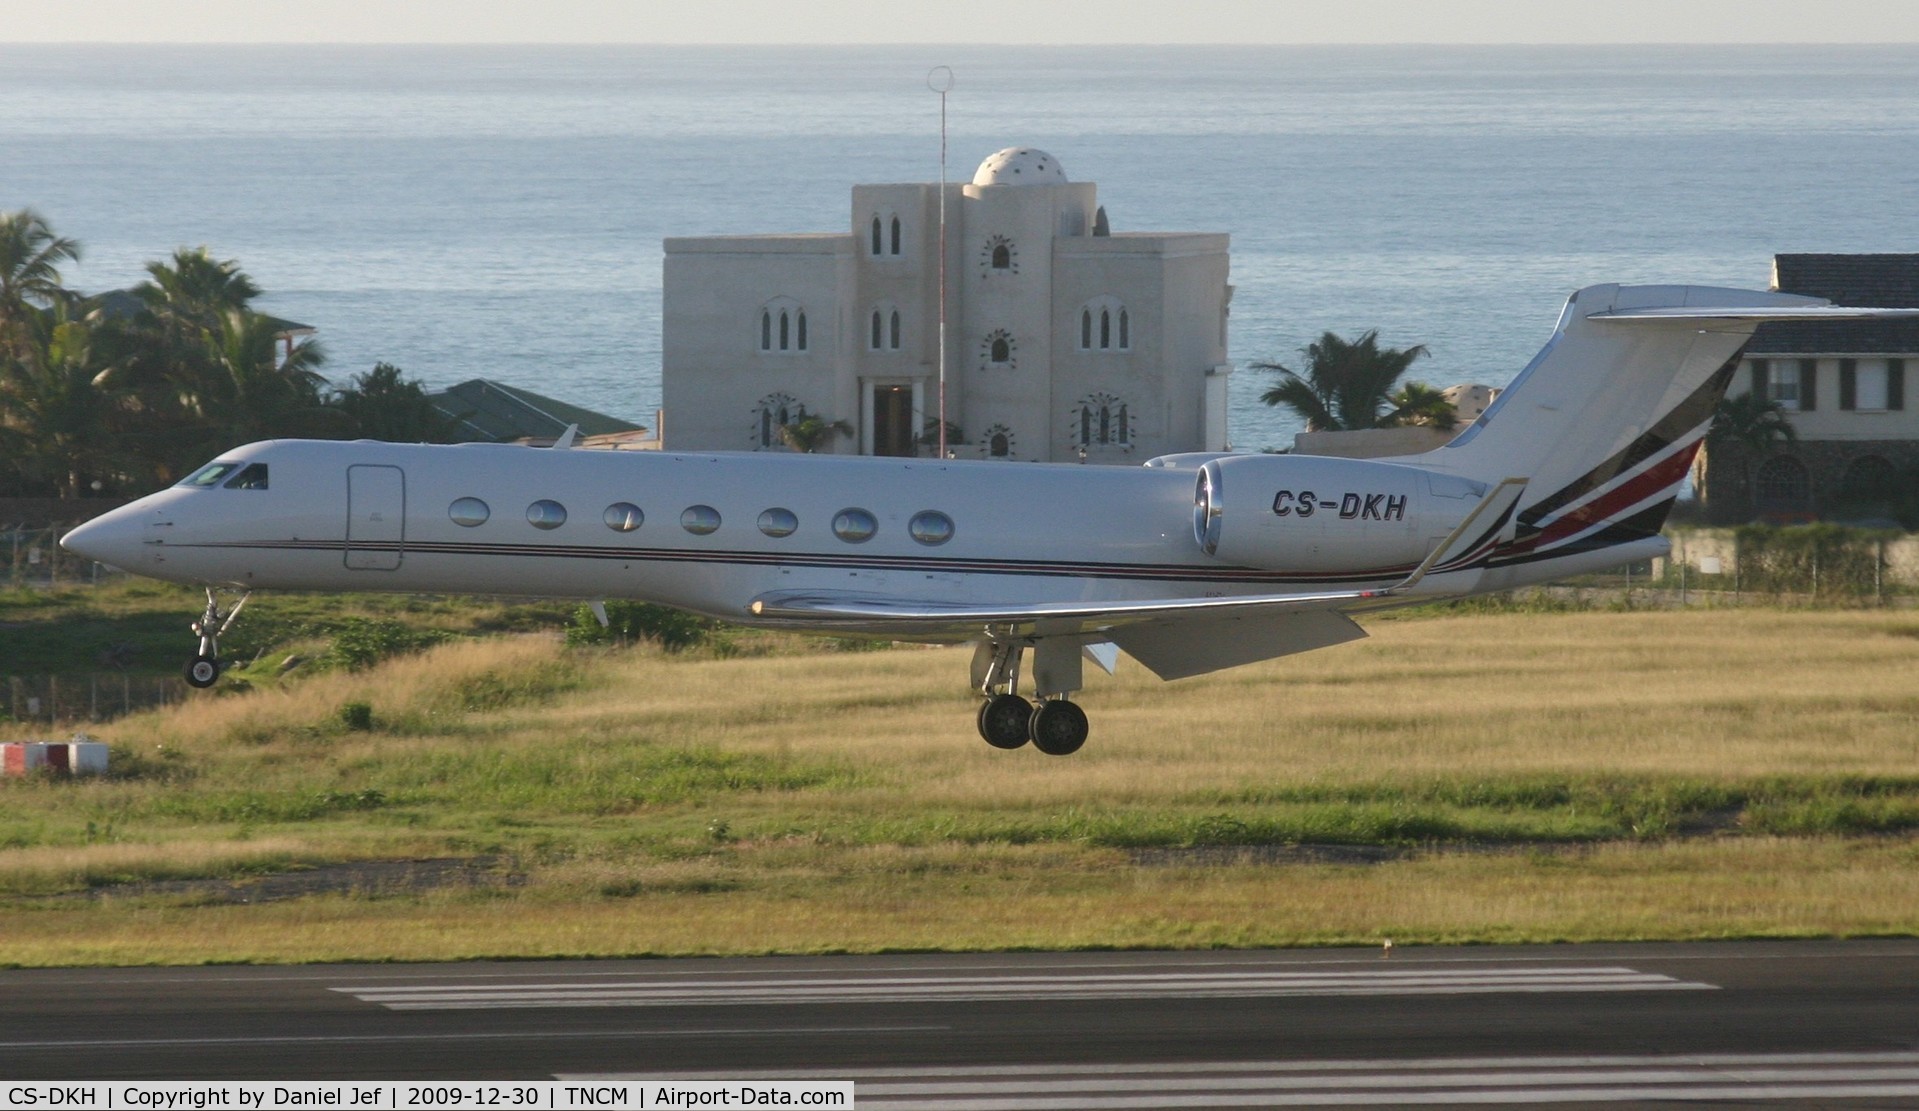 CS-DKH, 2007 Gulfstream Aerospace GV-SP (G550) C/N 5150, CS-DKH Landing at TNCM using the Numbers NJE172U